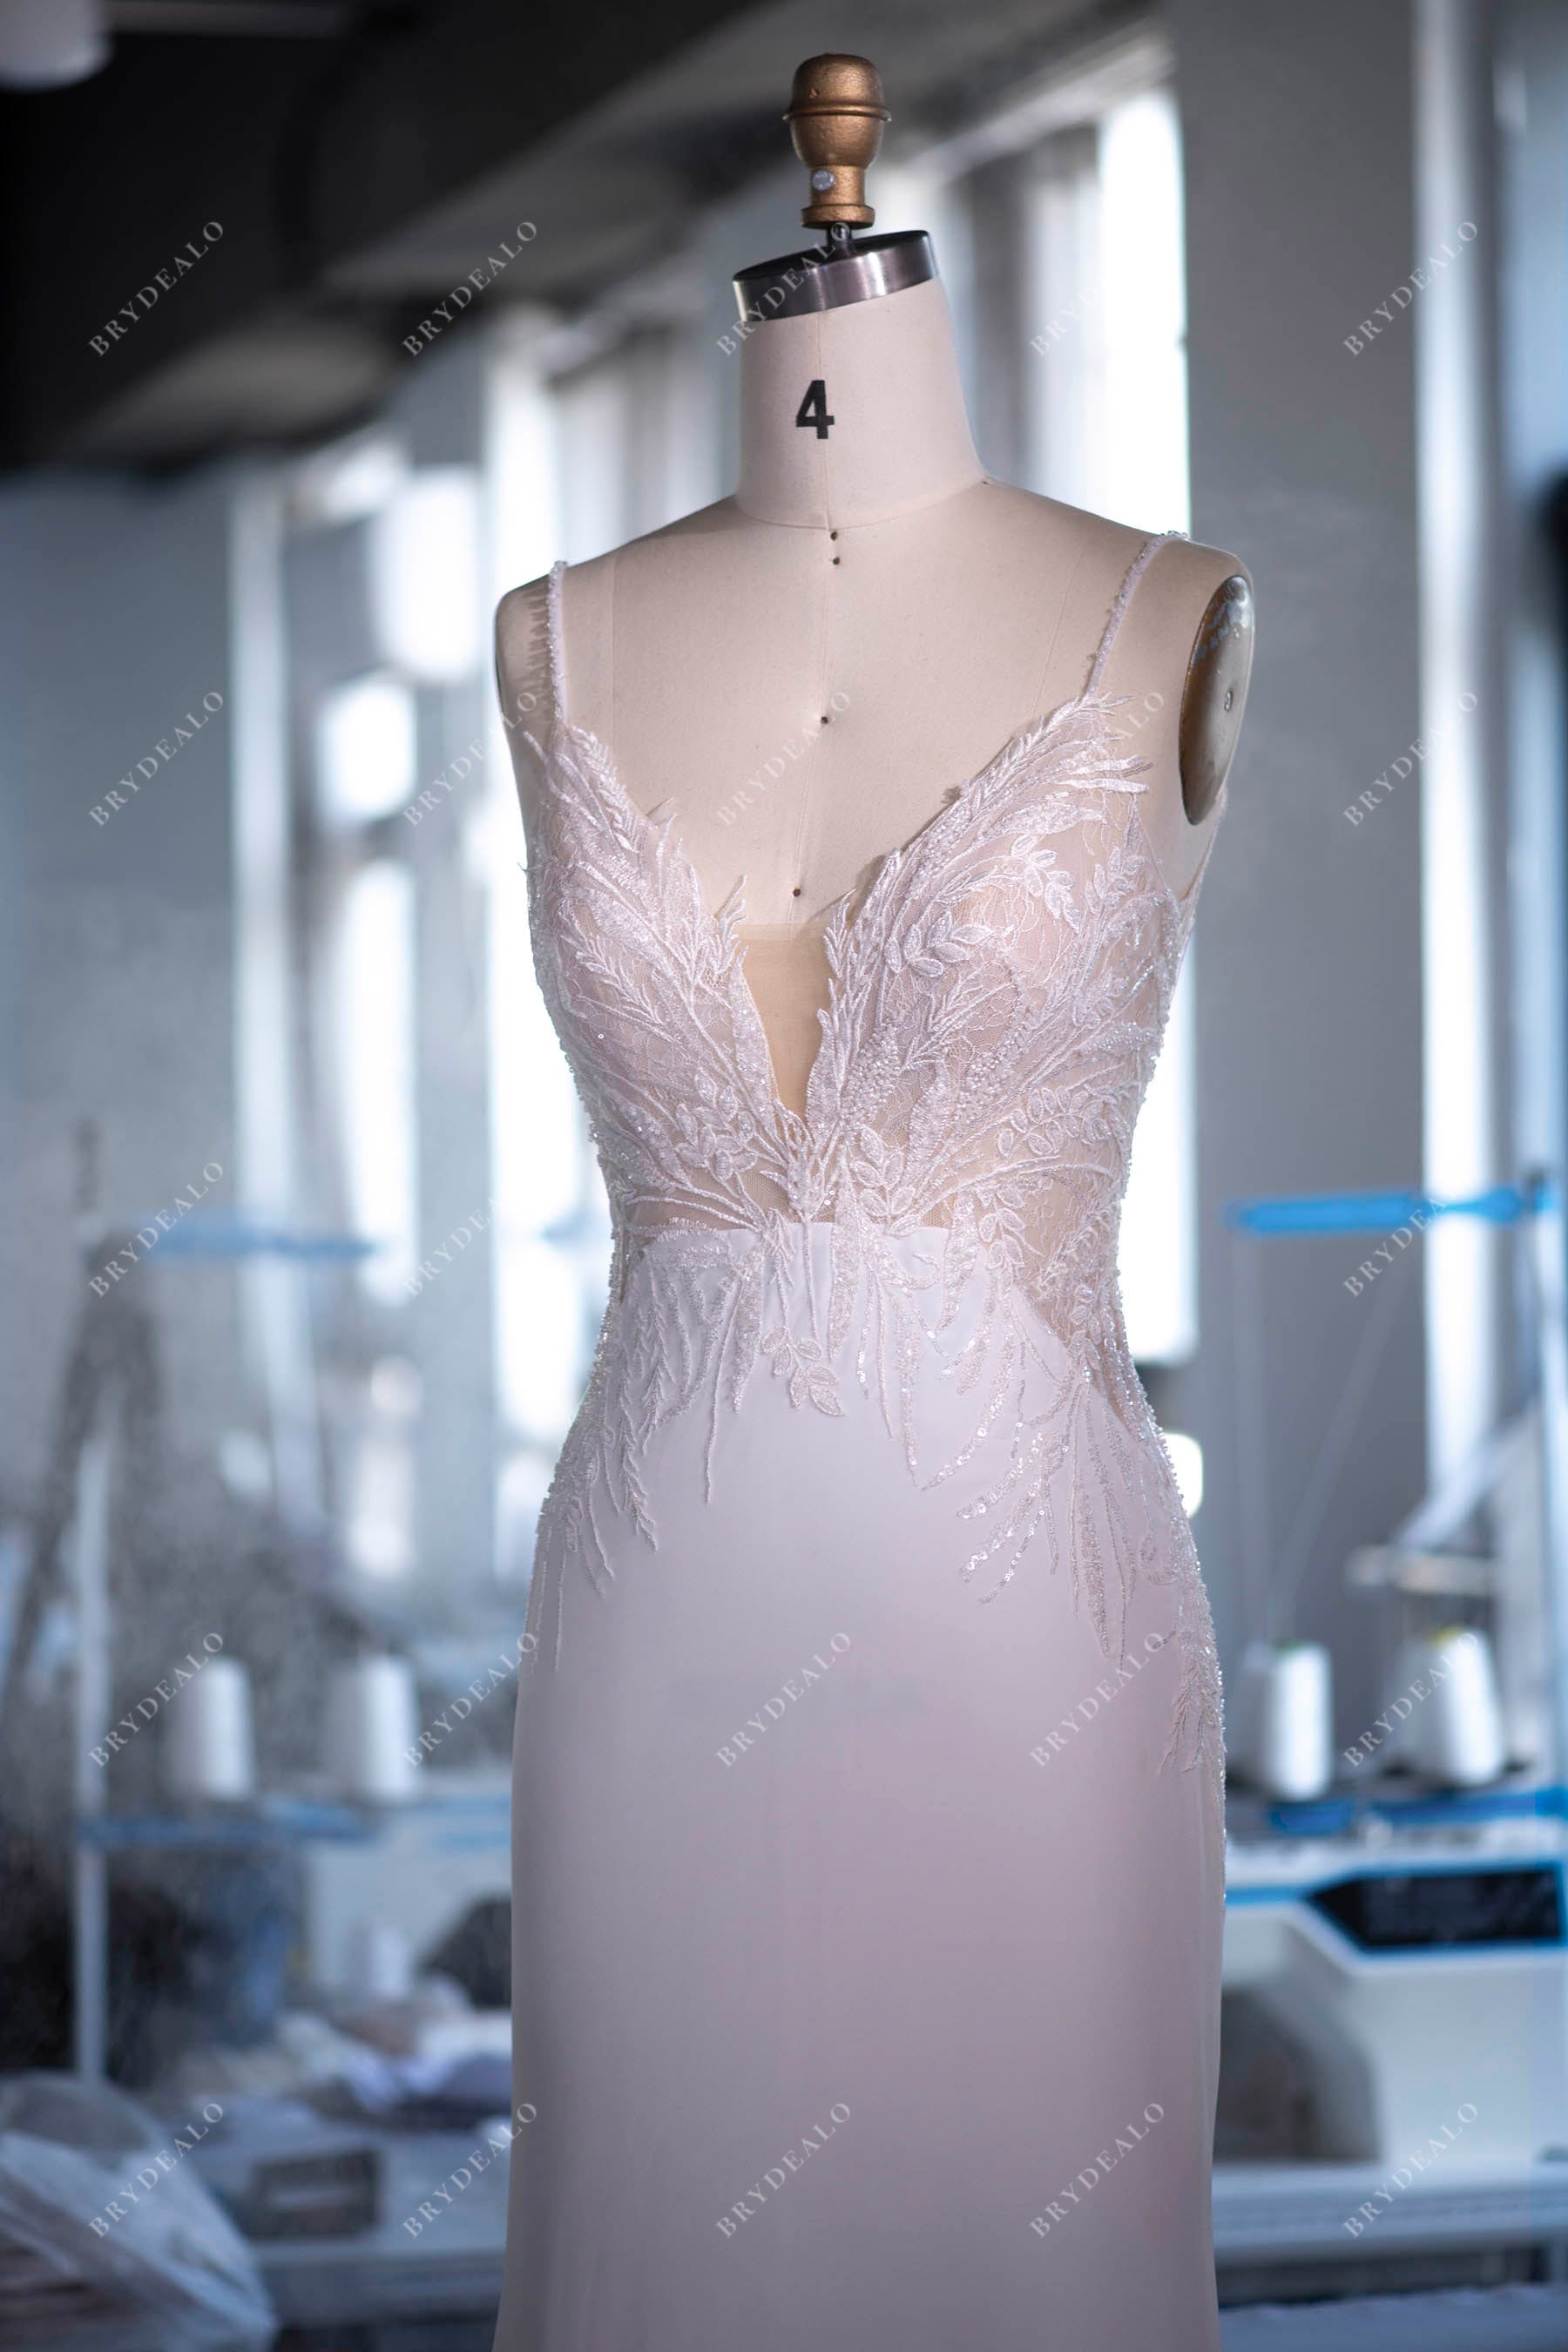 custom-made deep neck sleeveless wedding gown